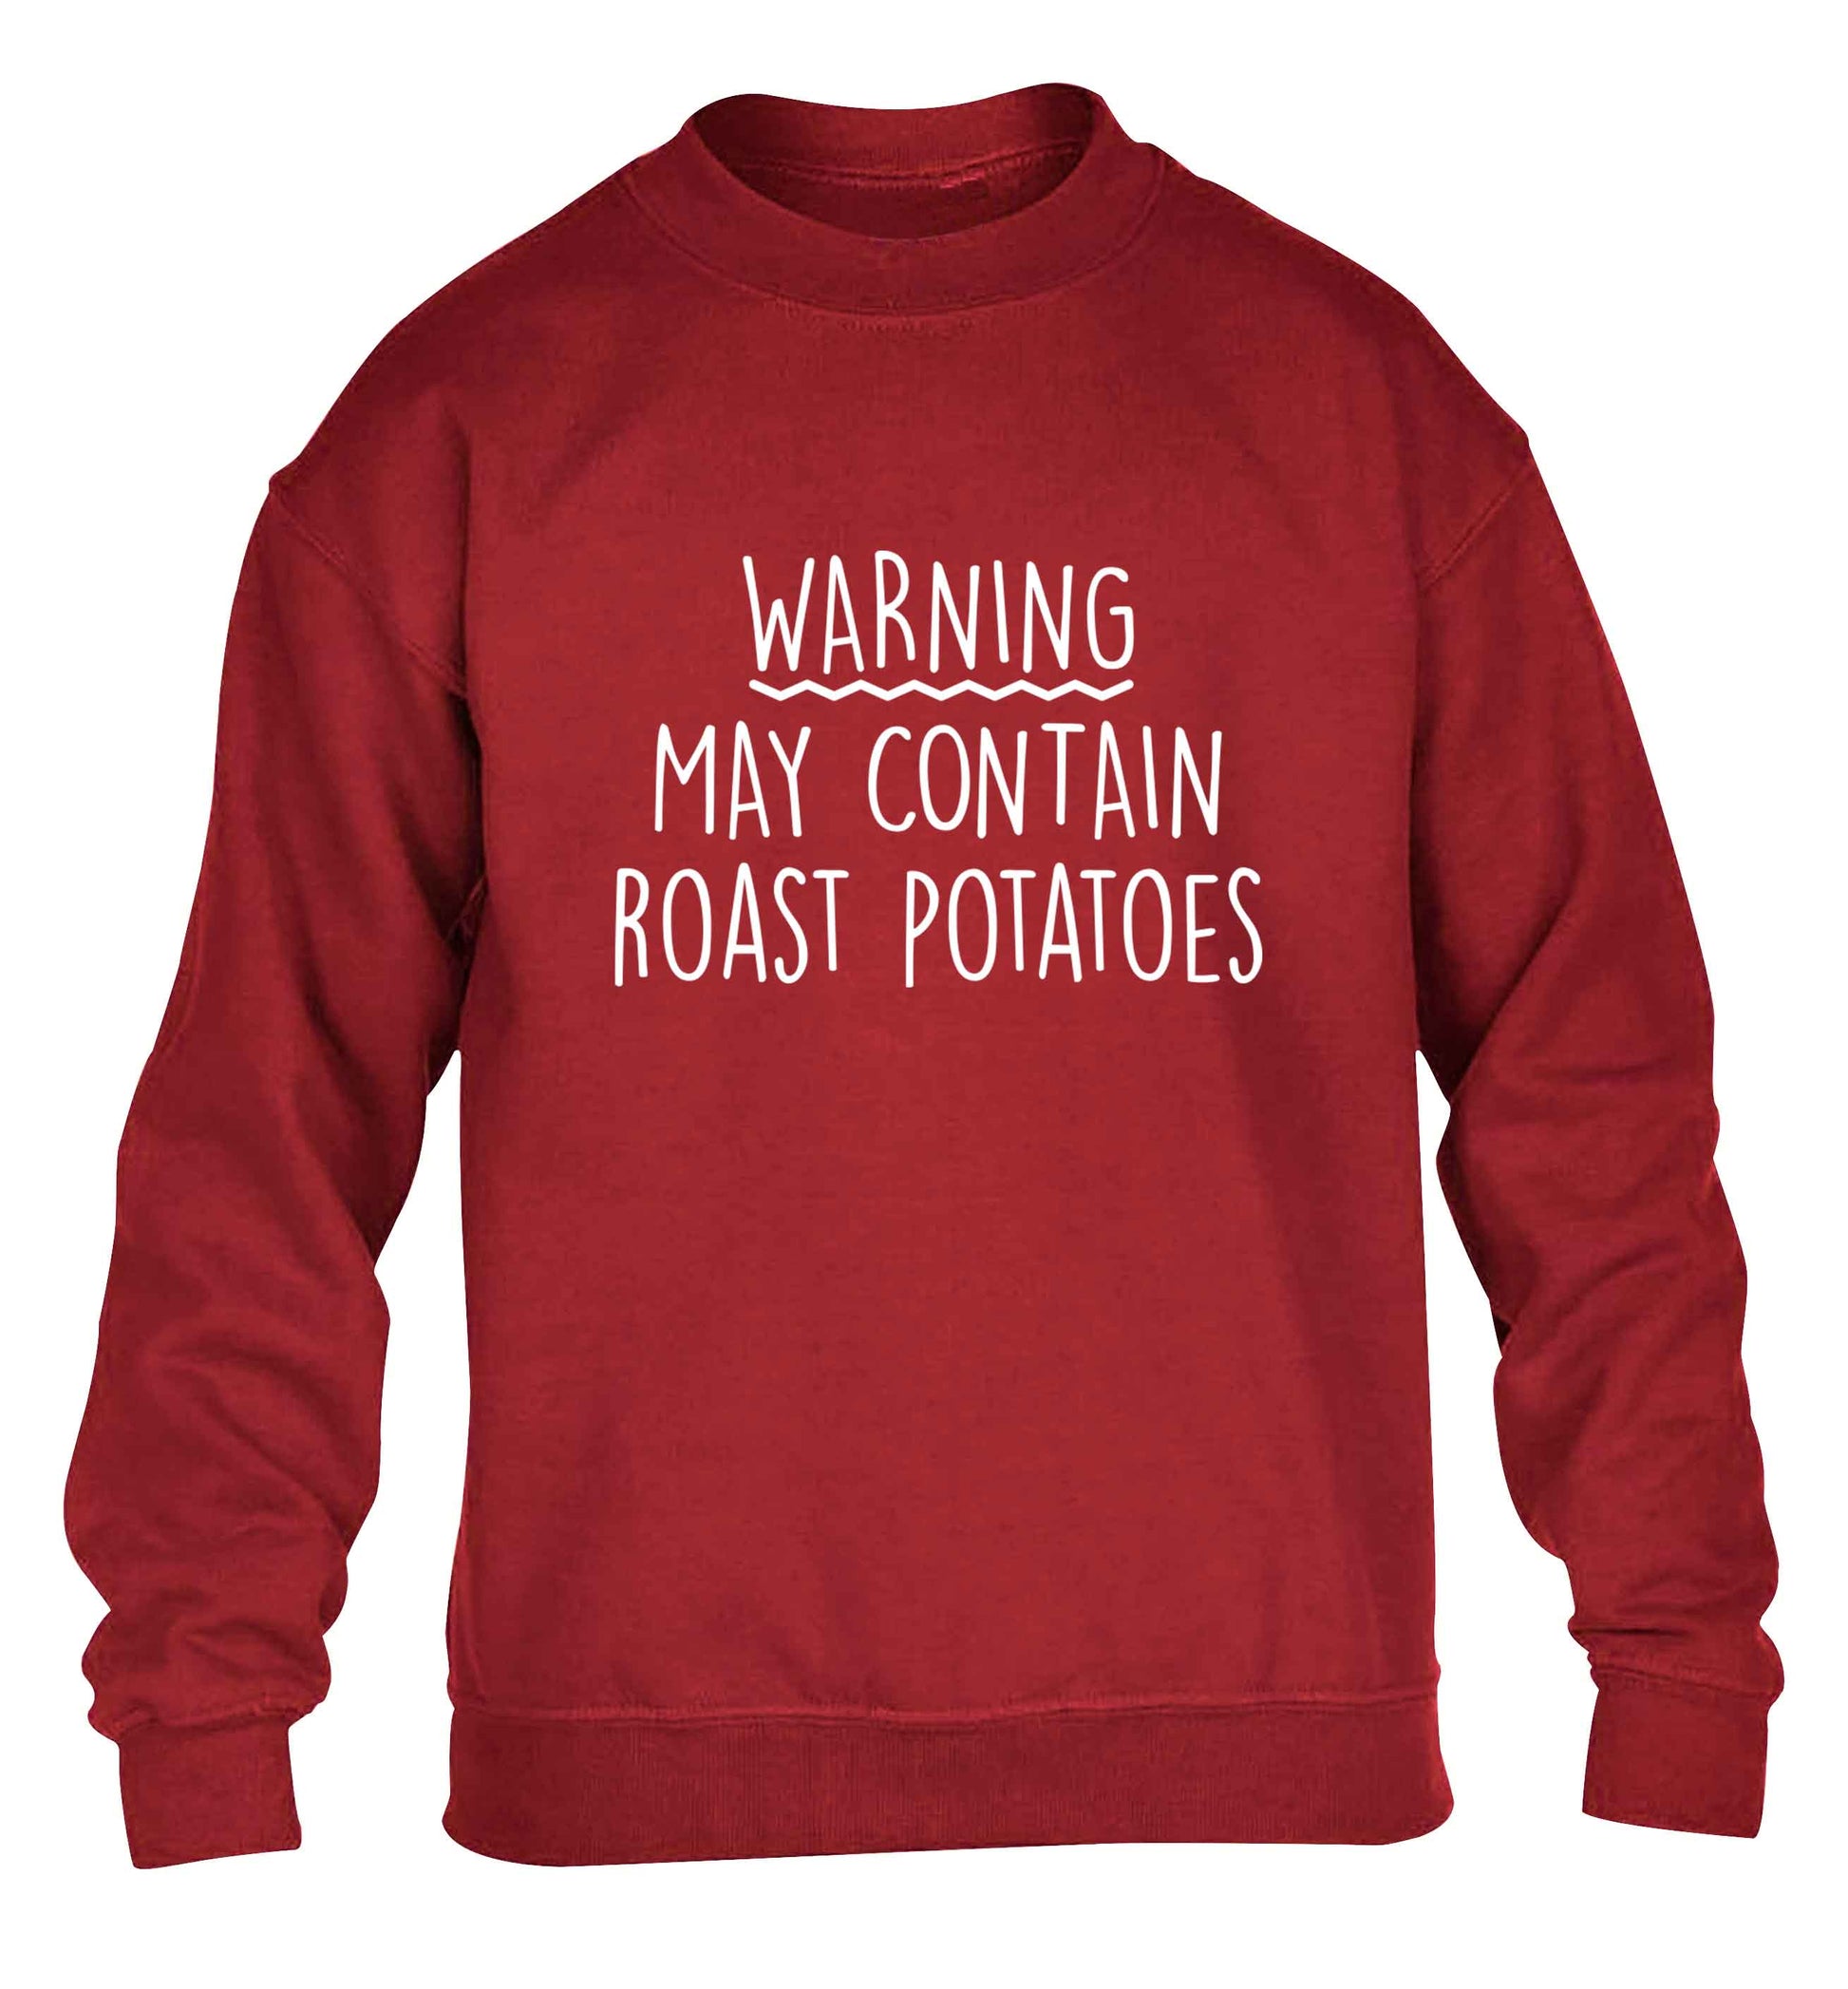 Warning may containg roast potatoes children's grey sweater 12-13 Years